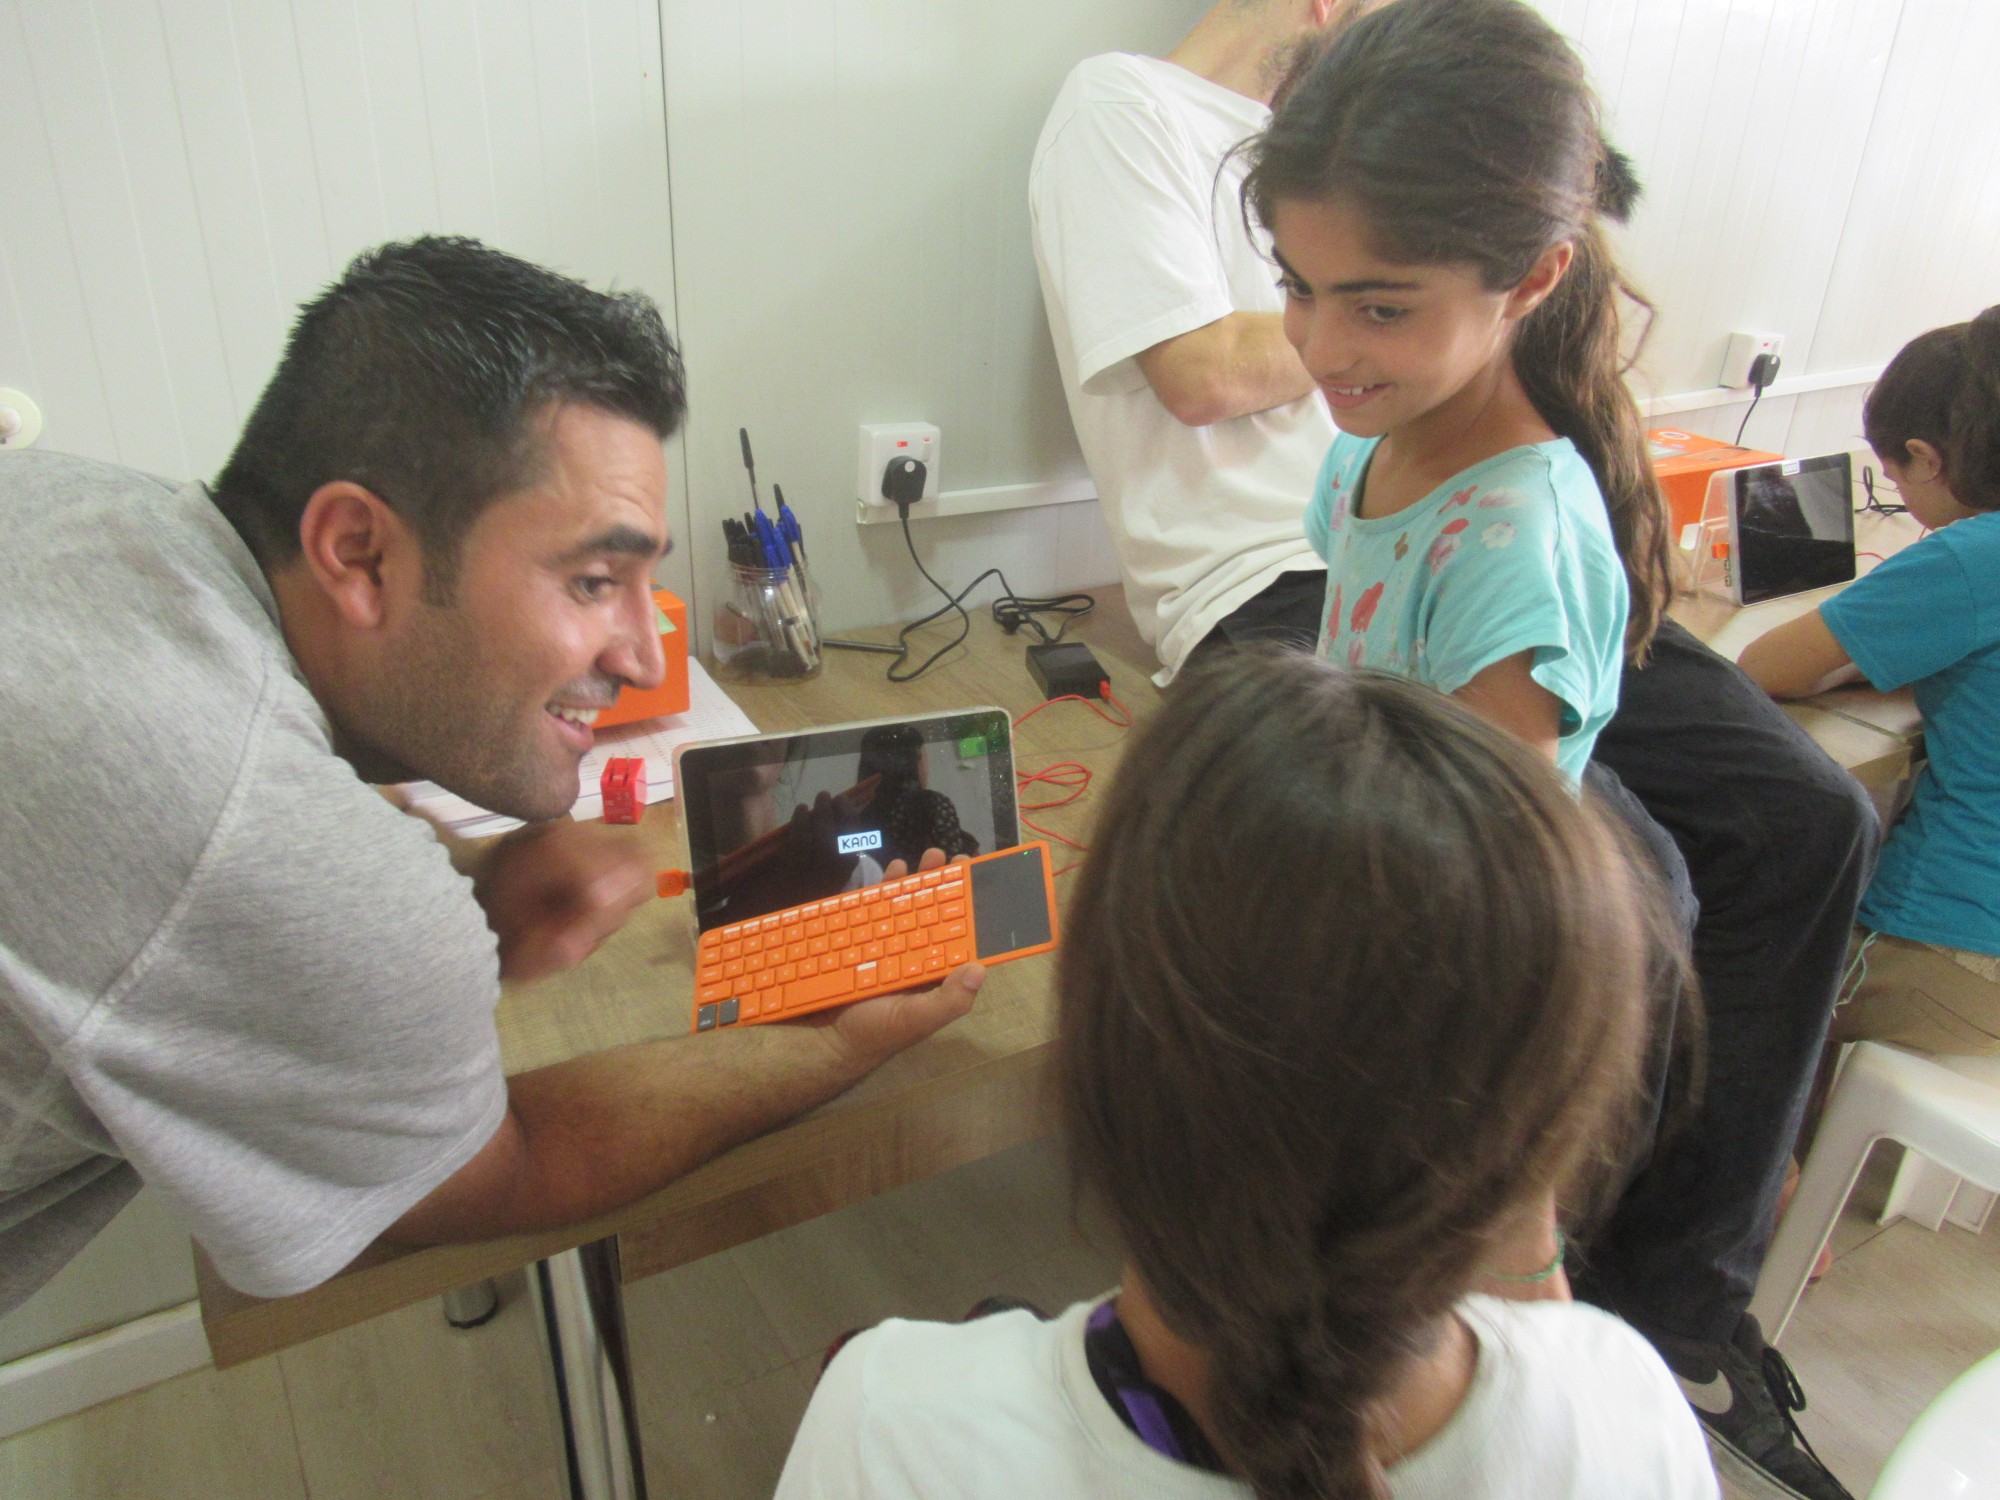 Kids Can Code: Teaching Technology in Iraq